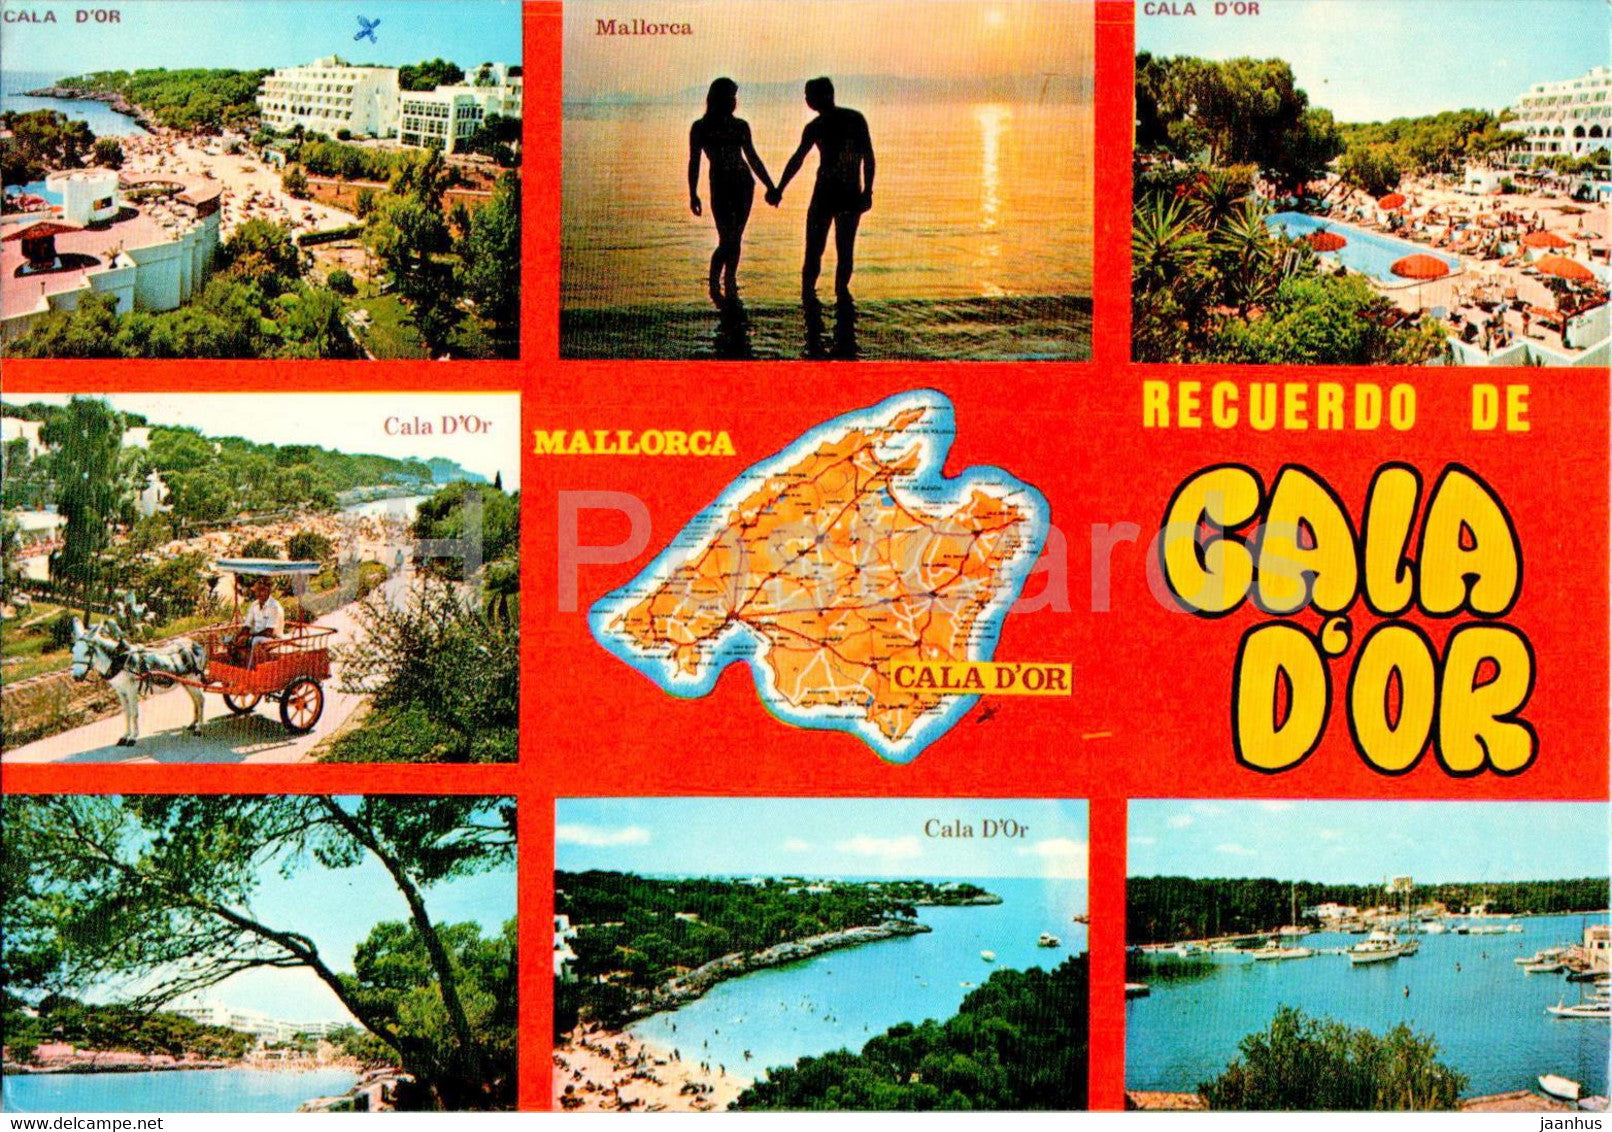 Recuerdo de Cala D'Or - Mallorca - multiview - 1345 - 1980 - Spain - used - JH Postcards